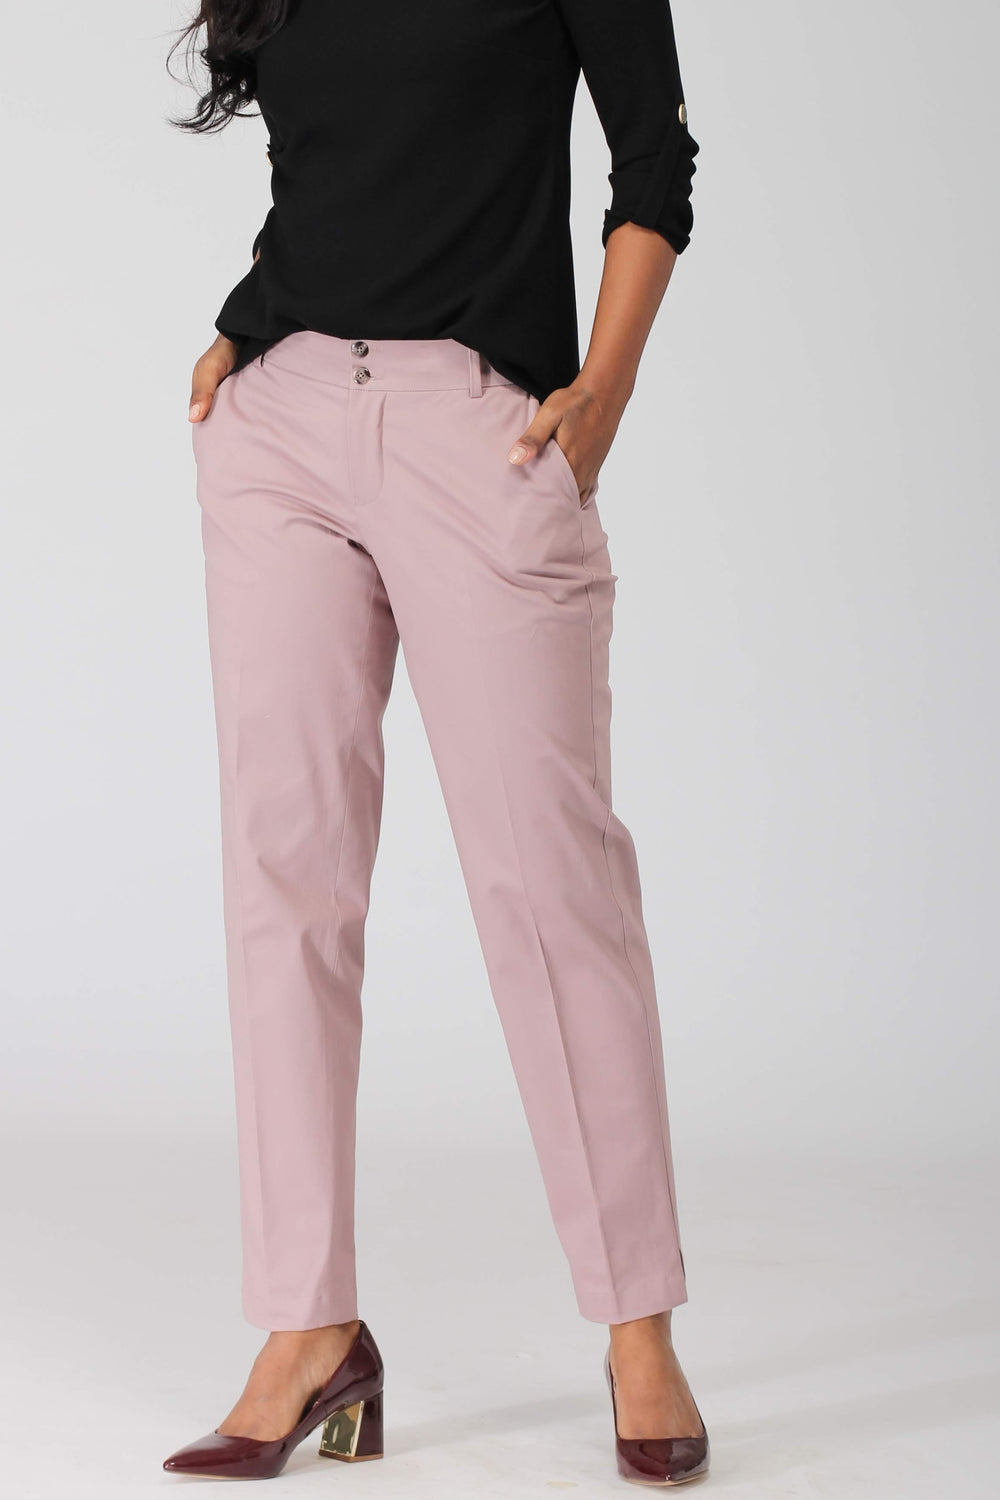 Cotton Stretch Pants for Women  Intermod Workwear